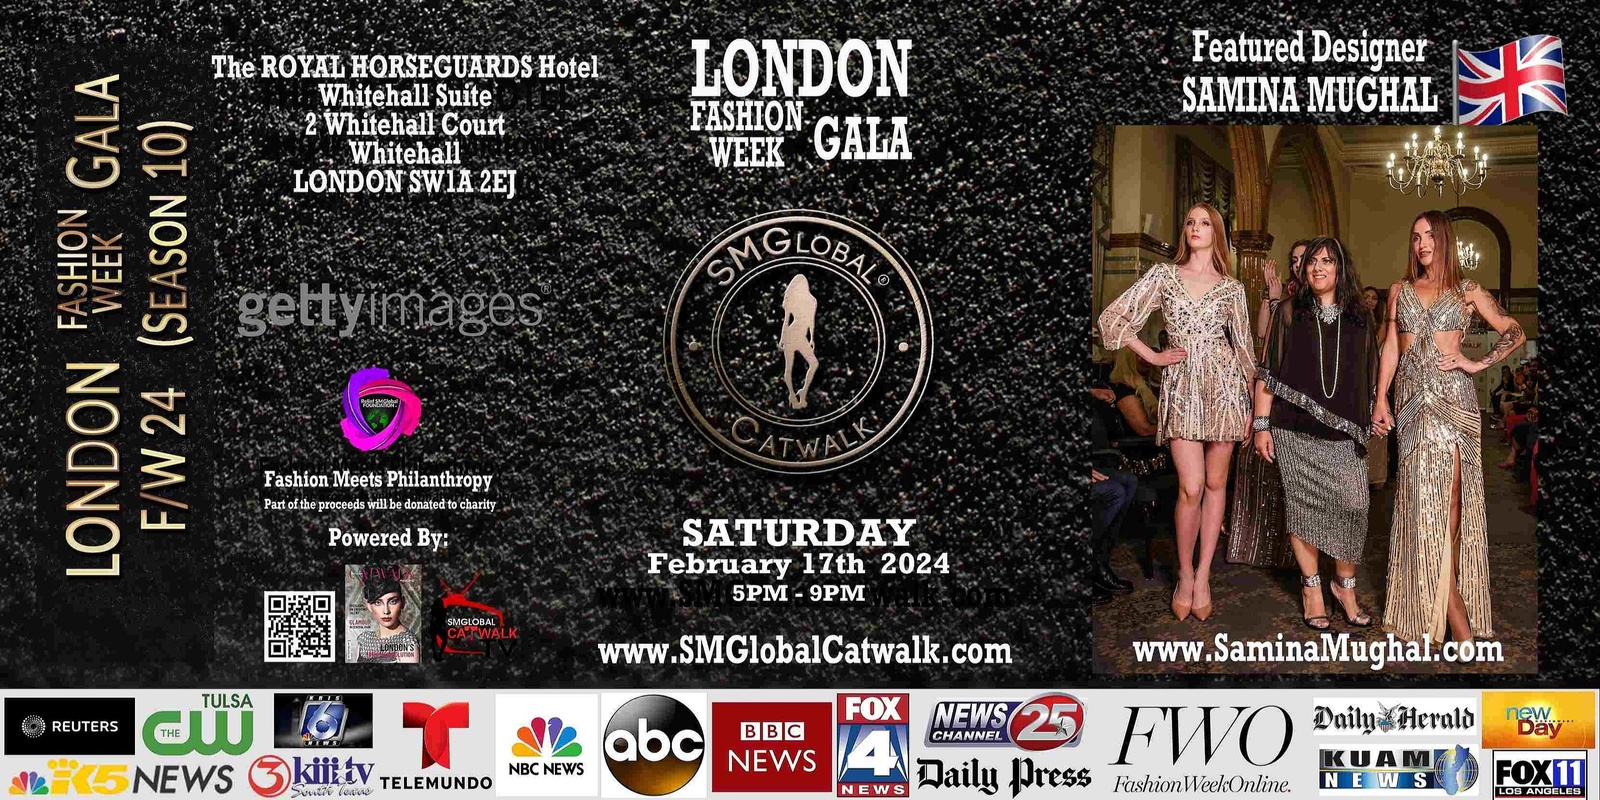 Banner image for LONDON Fashion GALA (F/W 24) – Saturday February 17th, 2024 